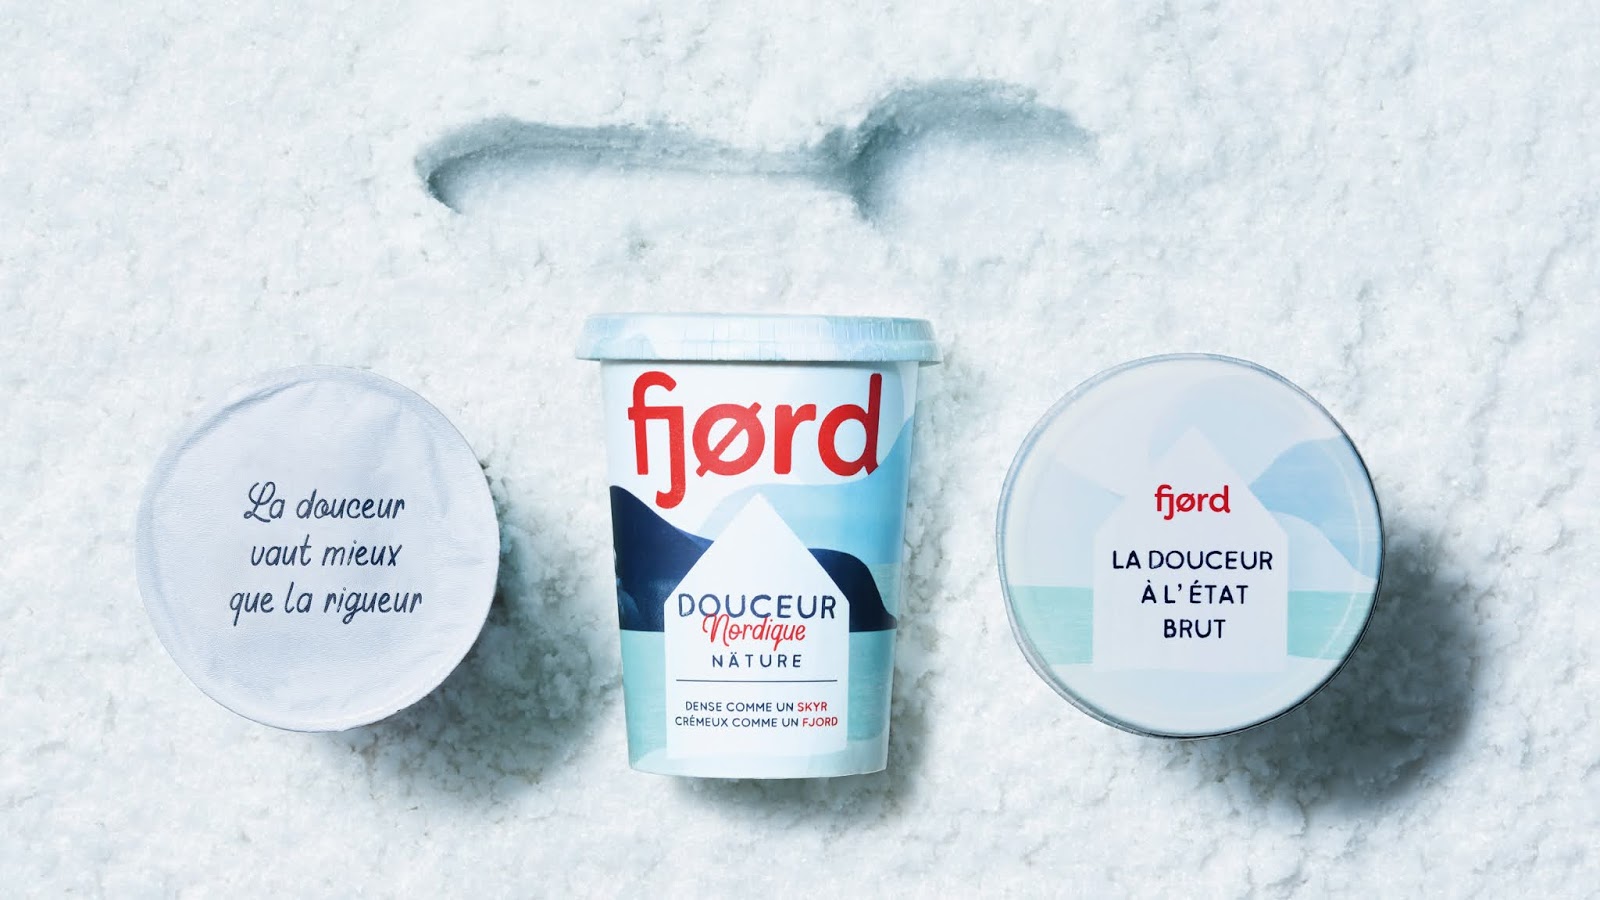 Danone Fjørd酸奶包装设计